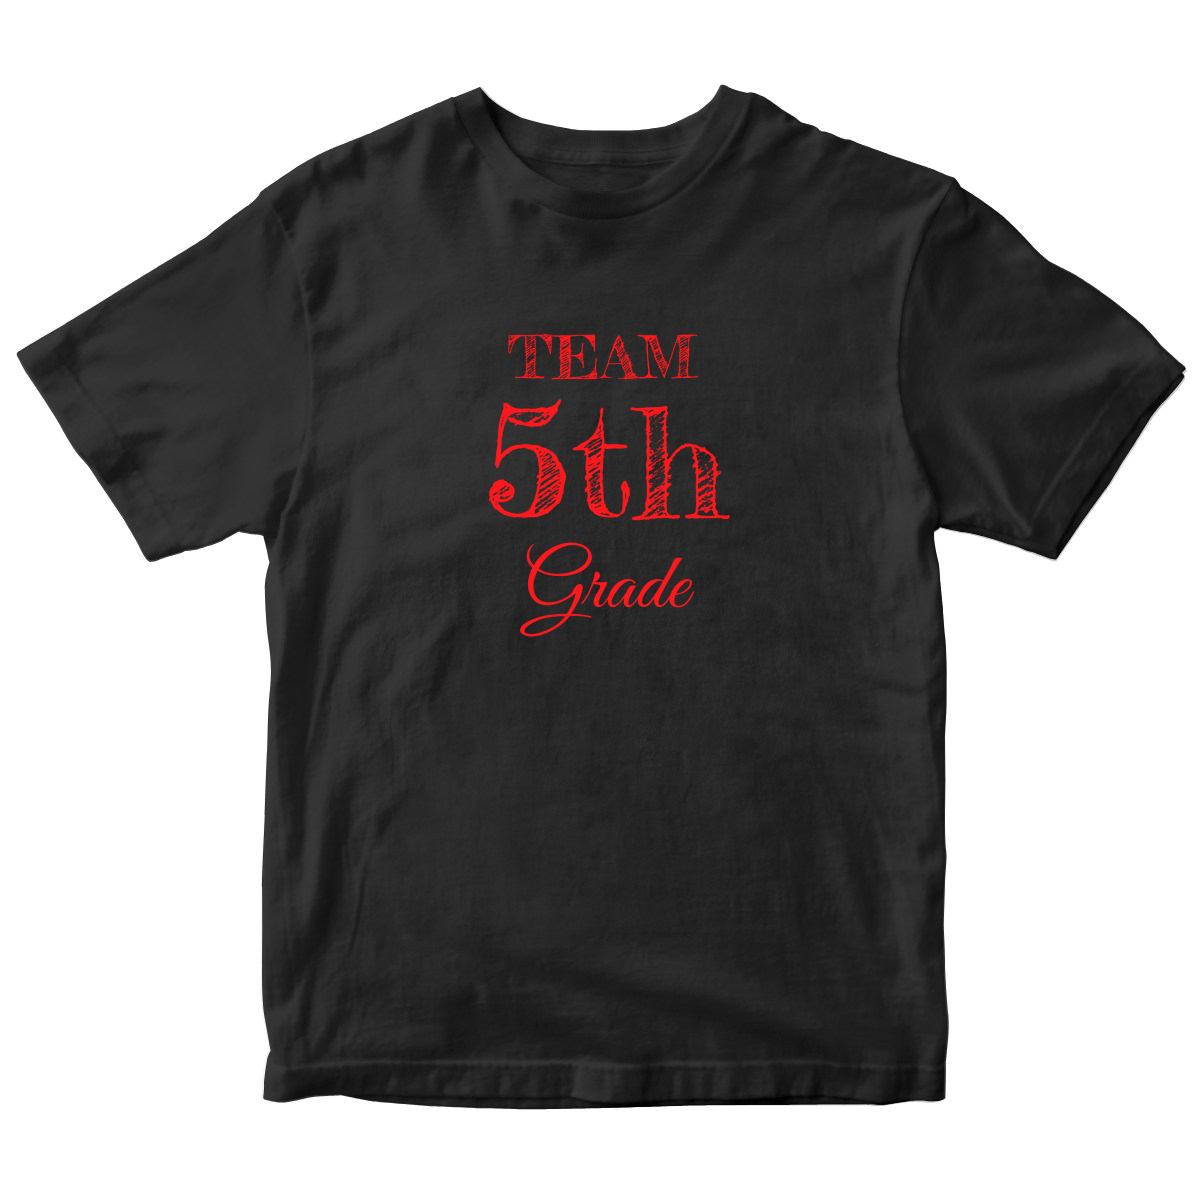 Team 5th Grade Kids T-shirt | Black